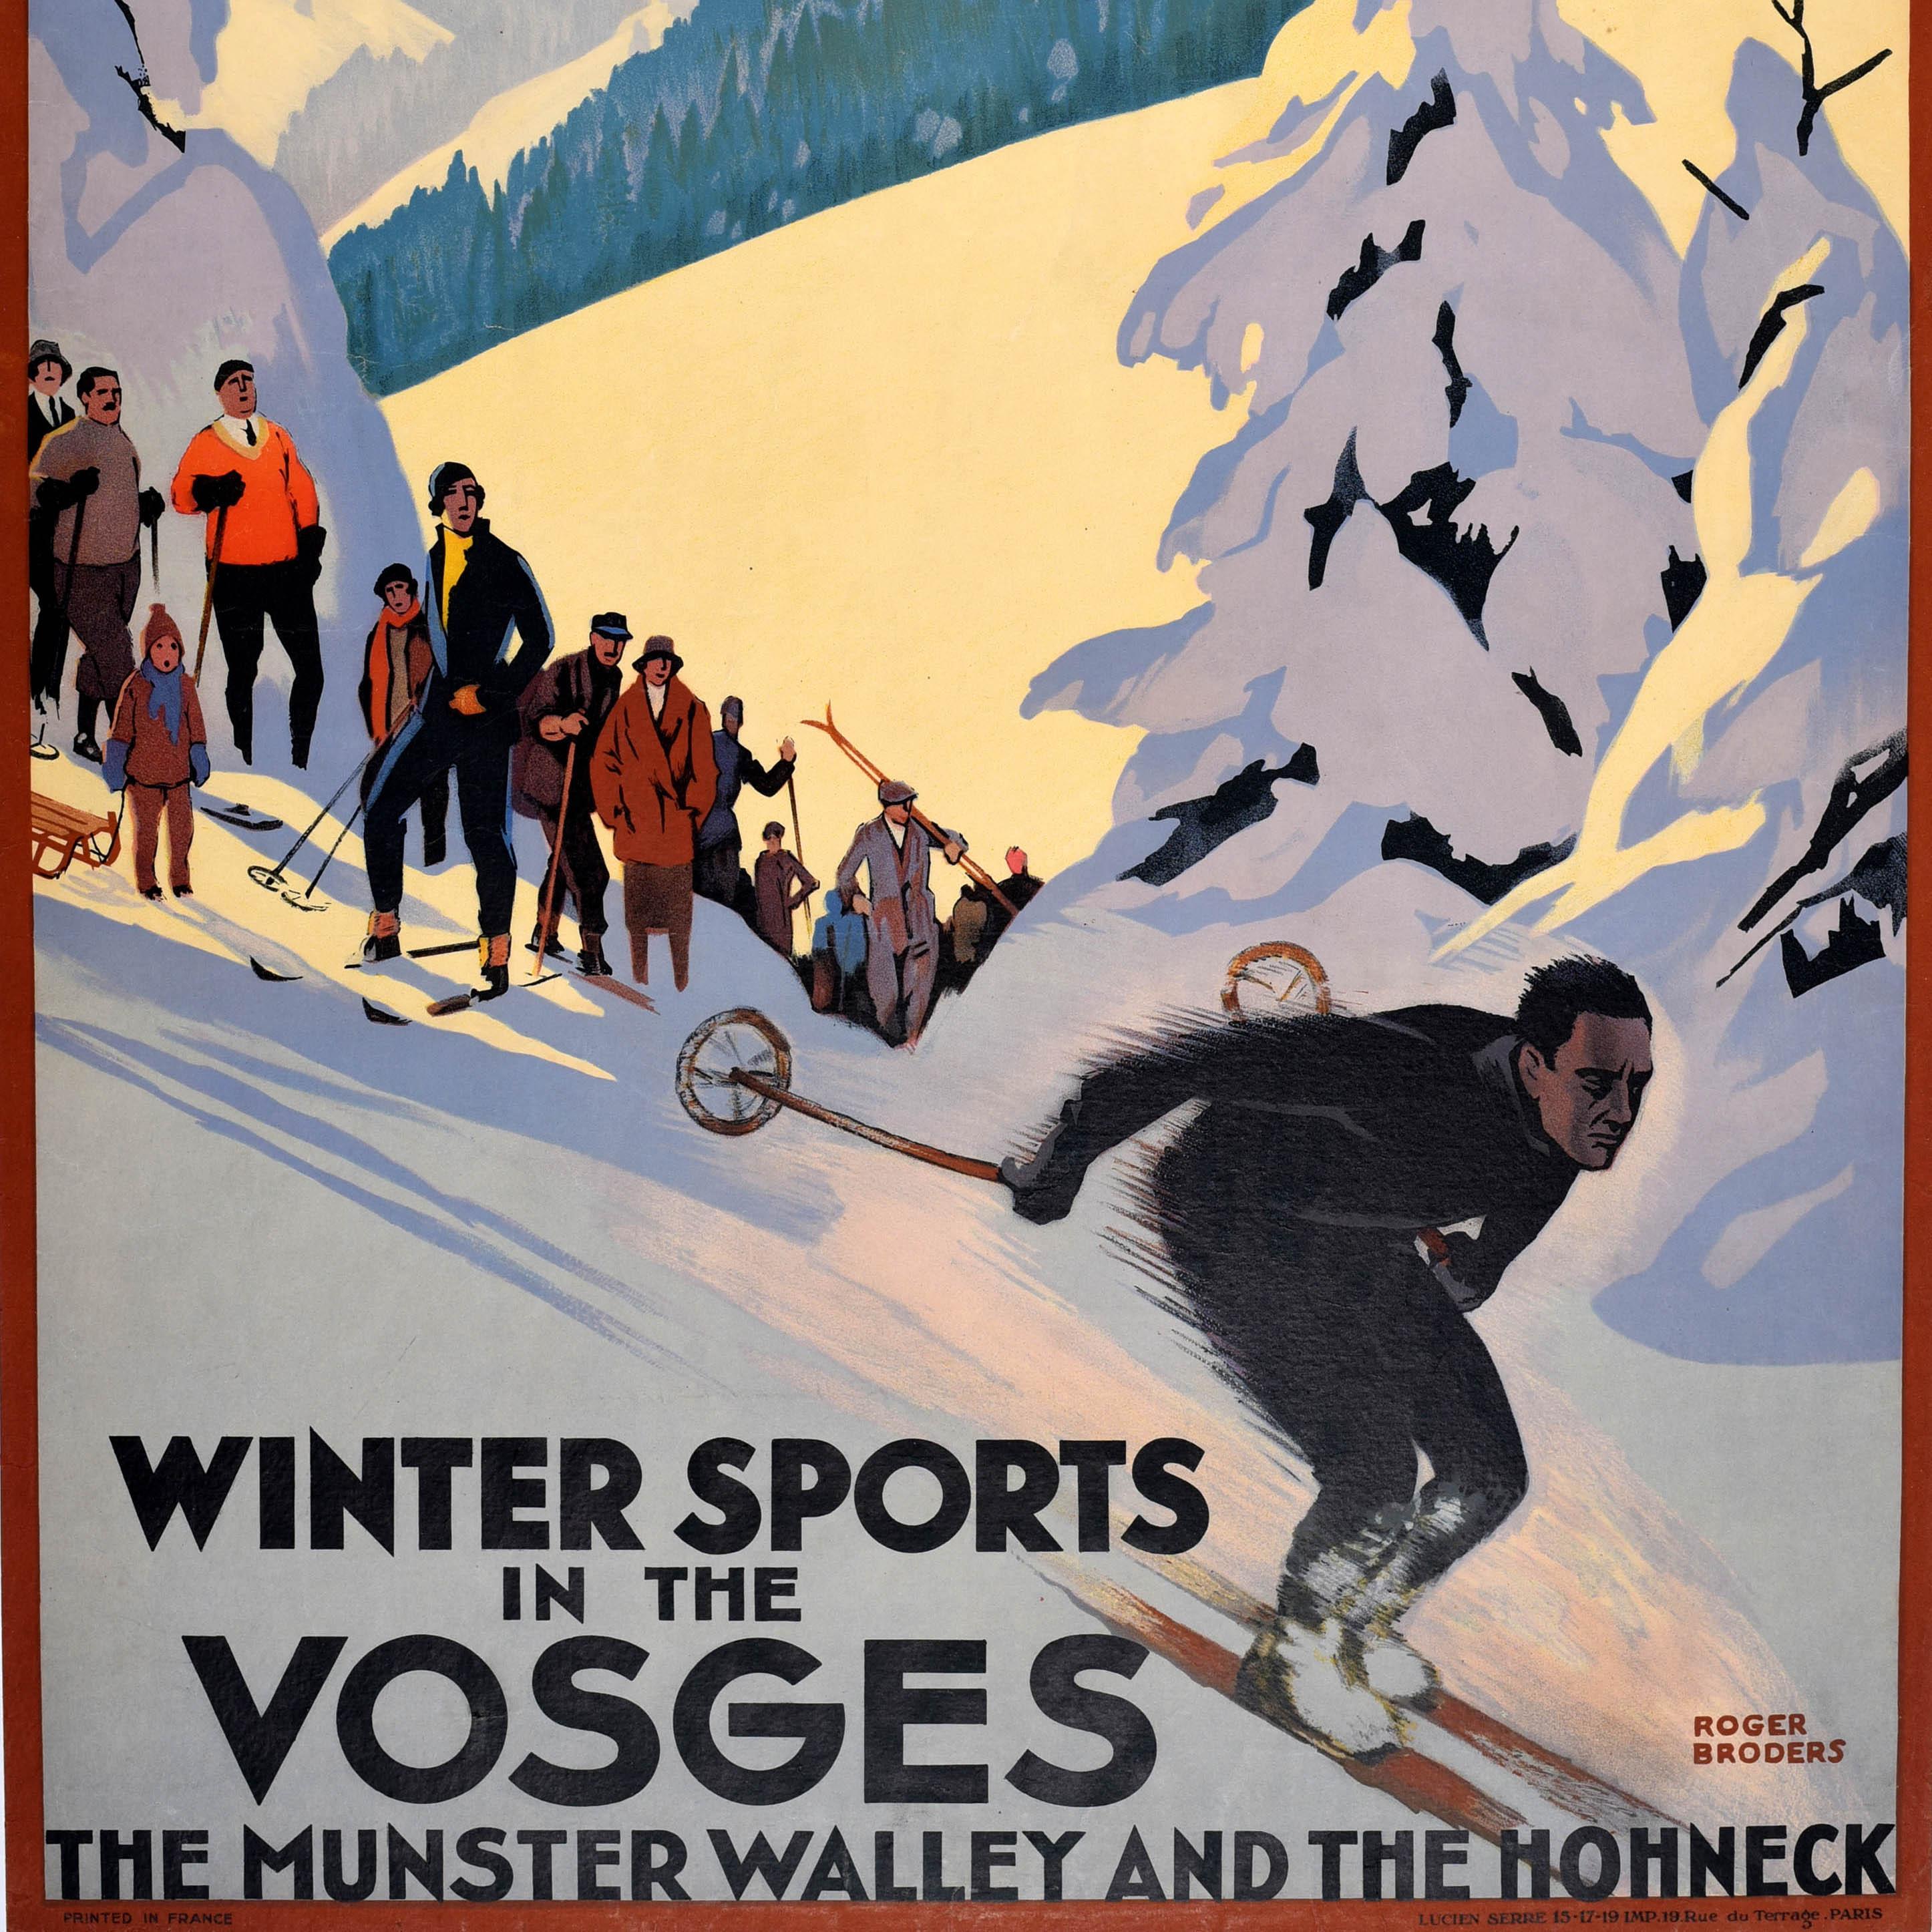 Français Affiche vintage originale de ski d'hiver Vosges France Roger Broders en vente